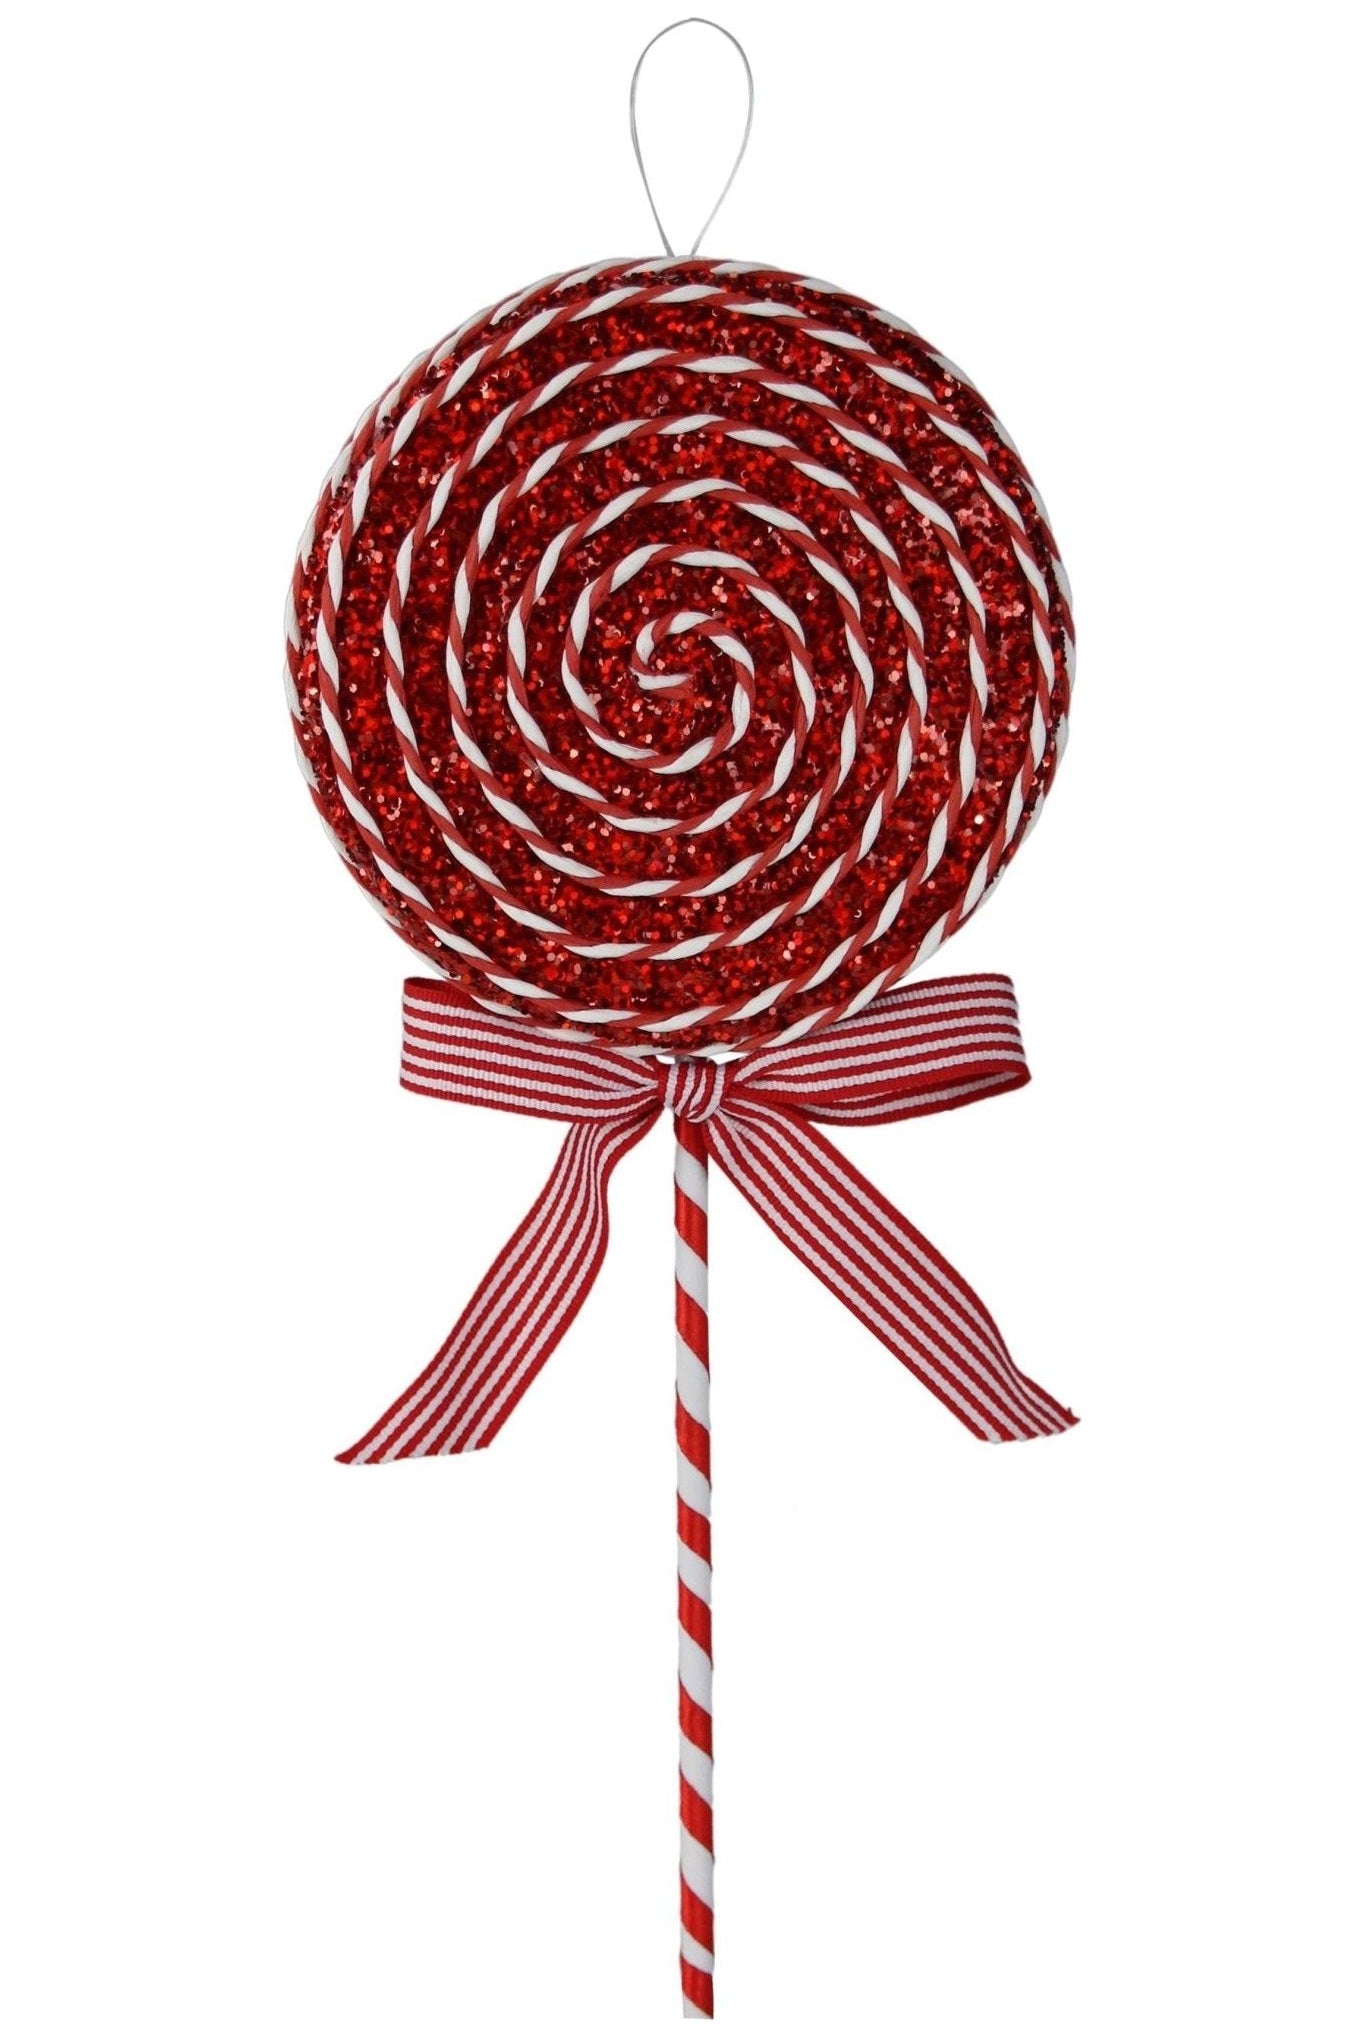 Shop For 14" Glitter Lollipop Bow Pick: Red & White XJ449537